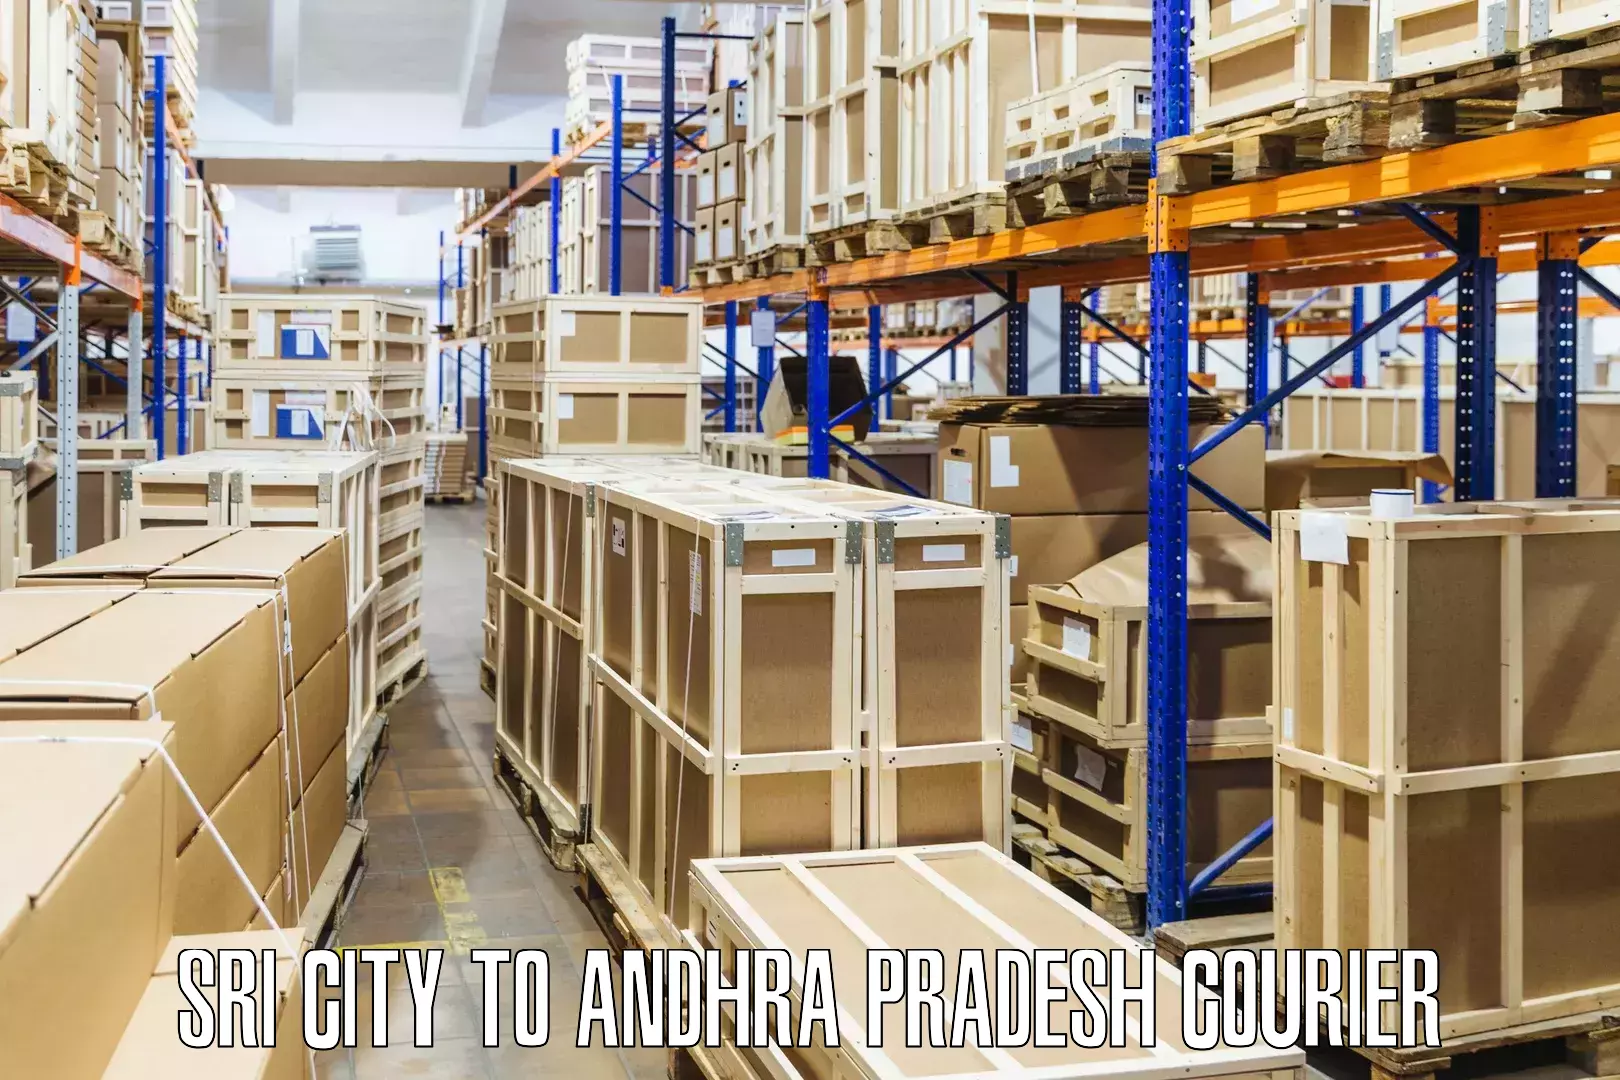 Speedy delivery service Sri City to Kudair